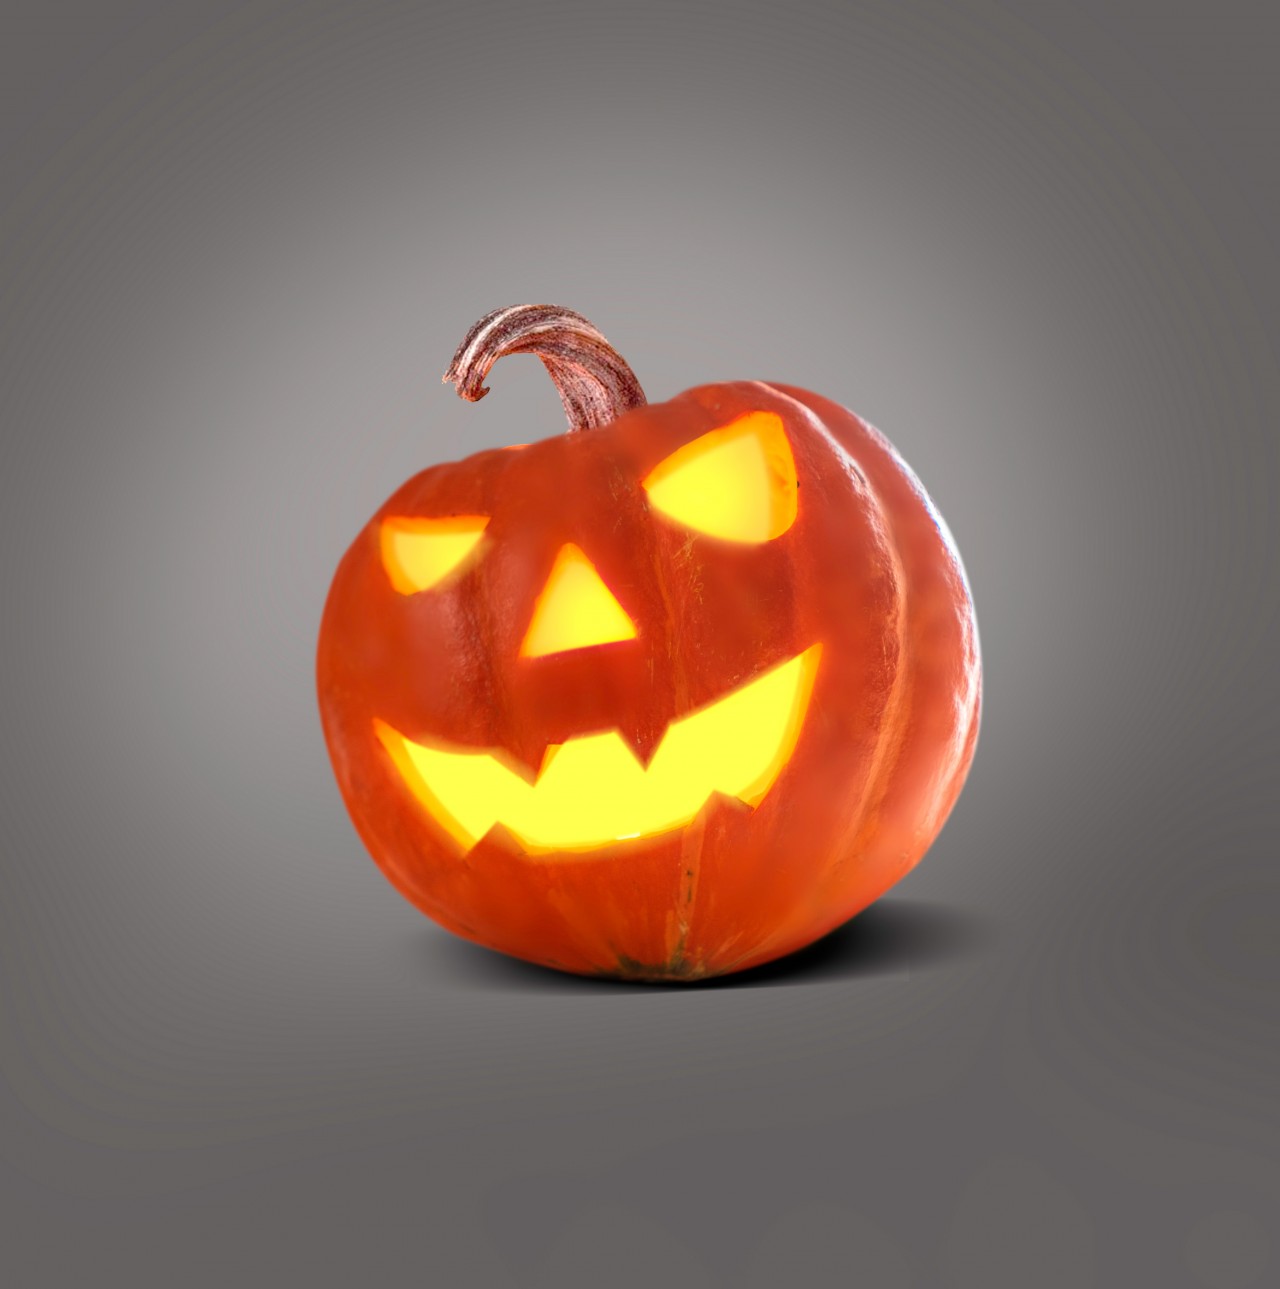 Scary Halloween pumpkin on grey background